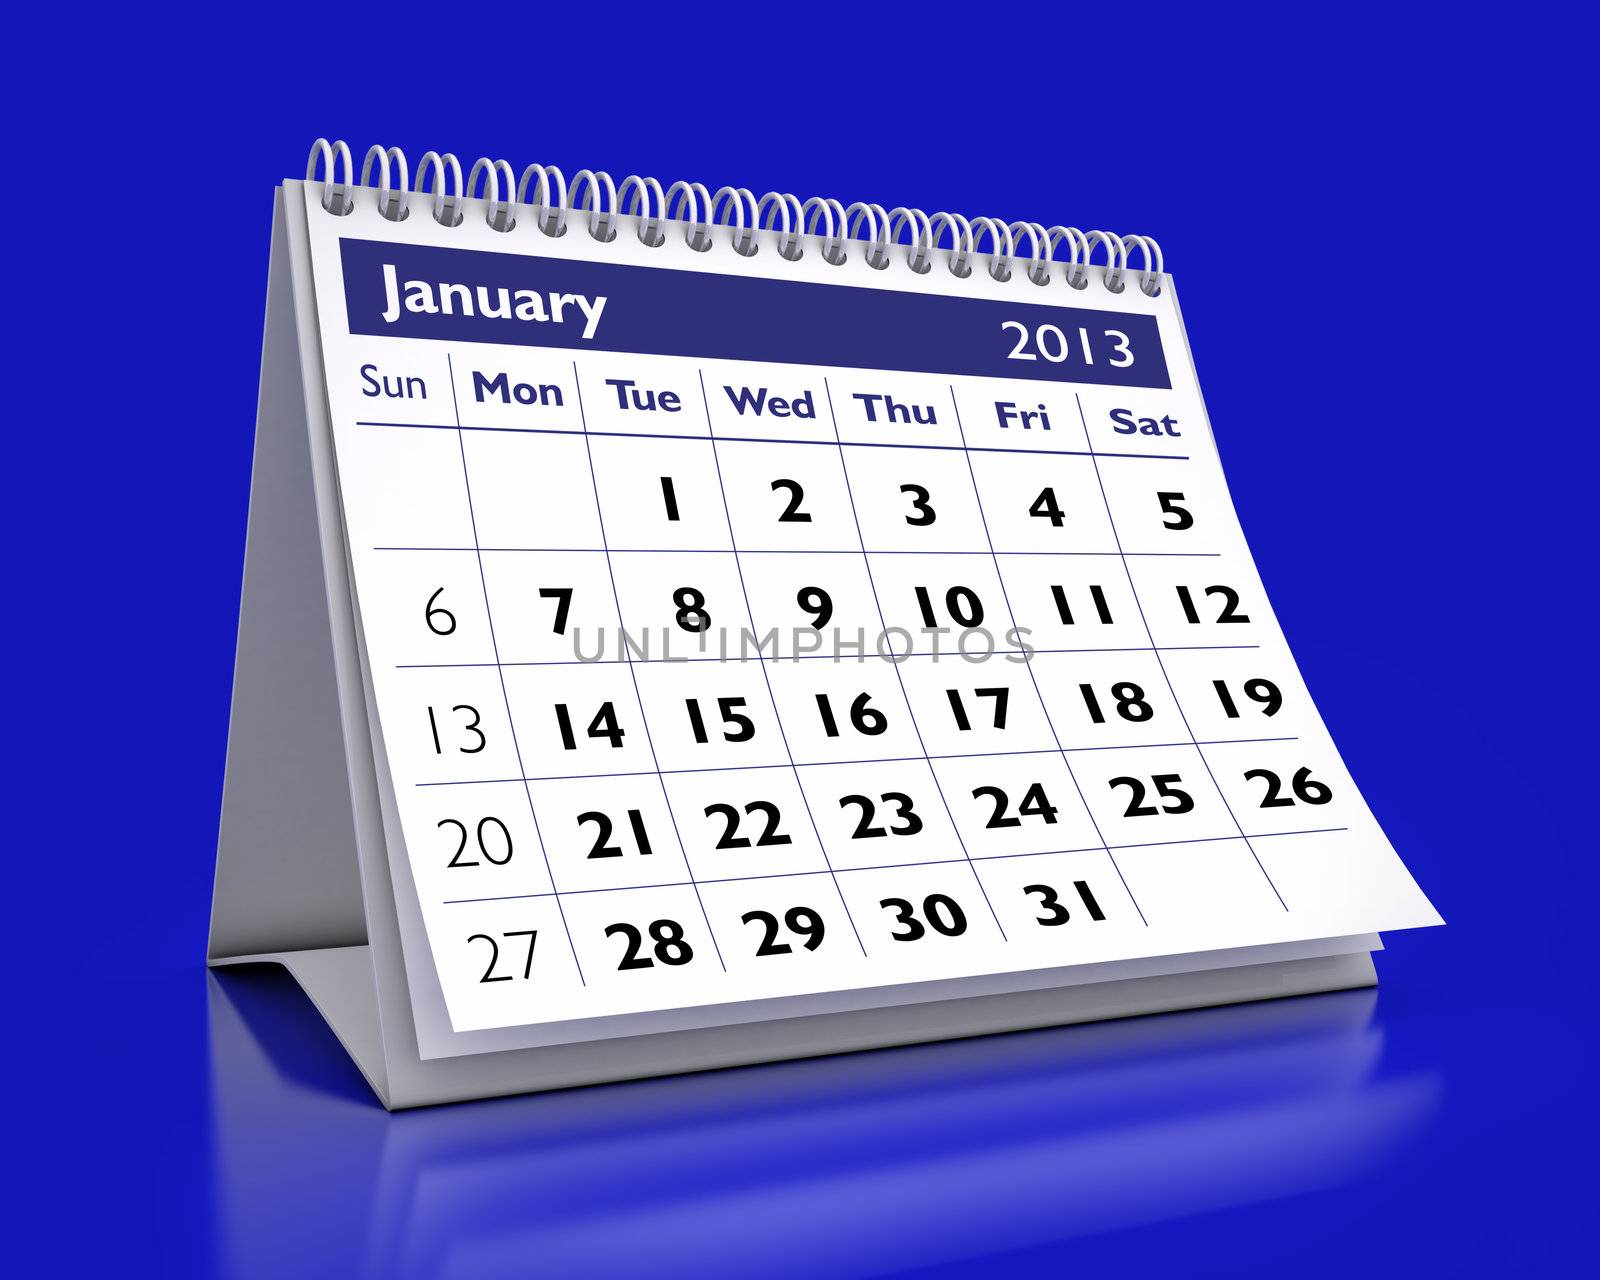 3D desktop calendar January 2013 in color background